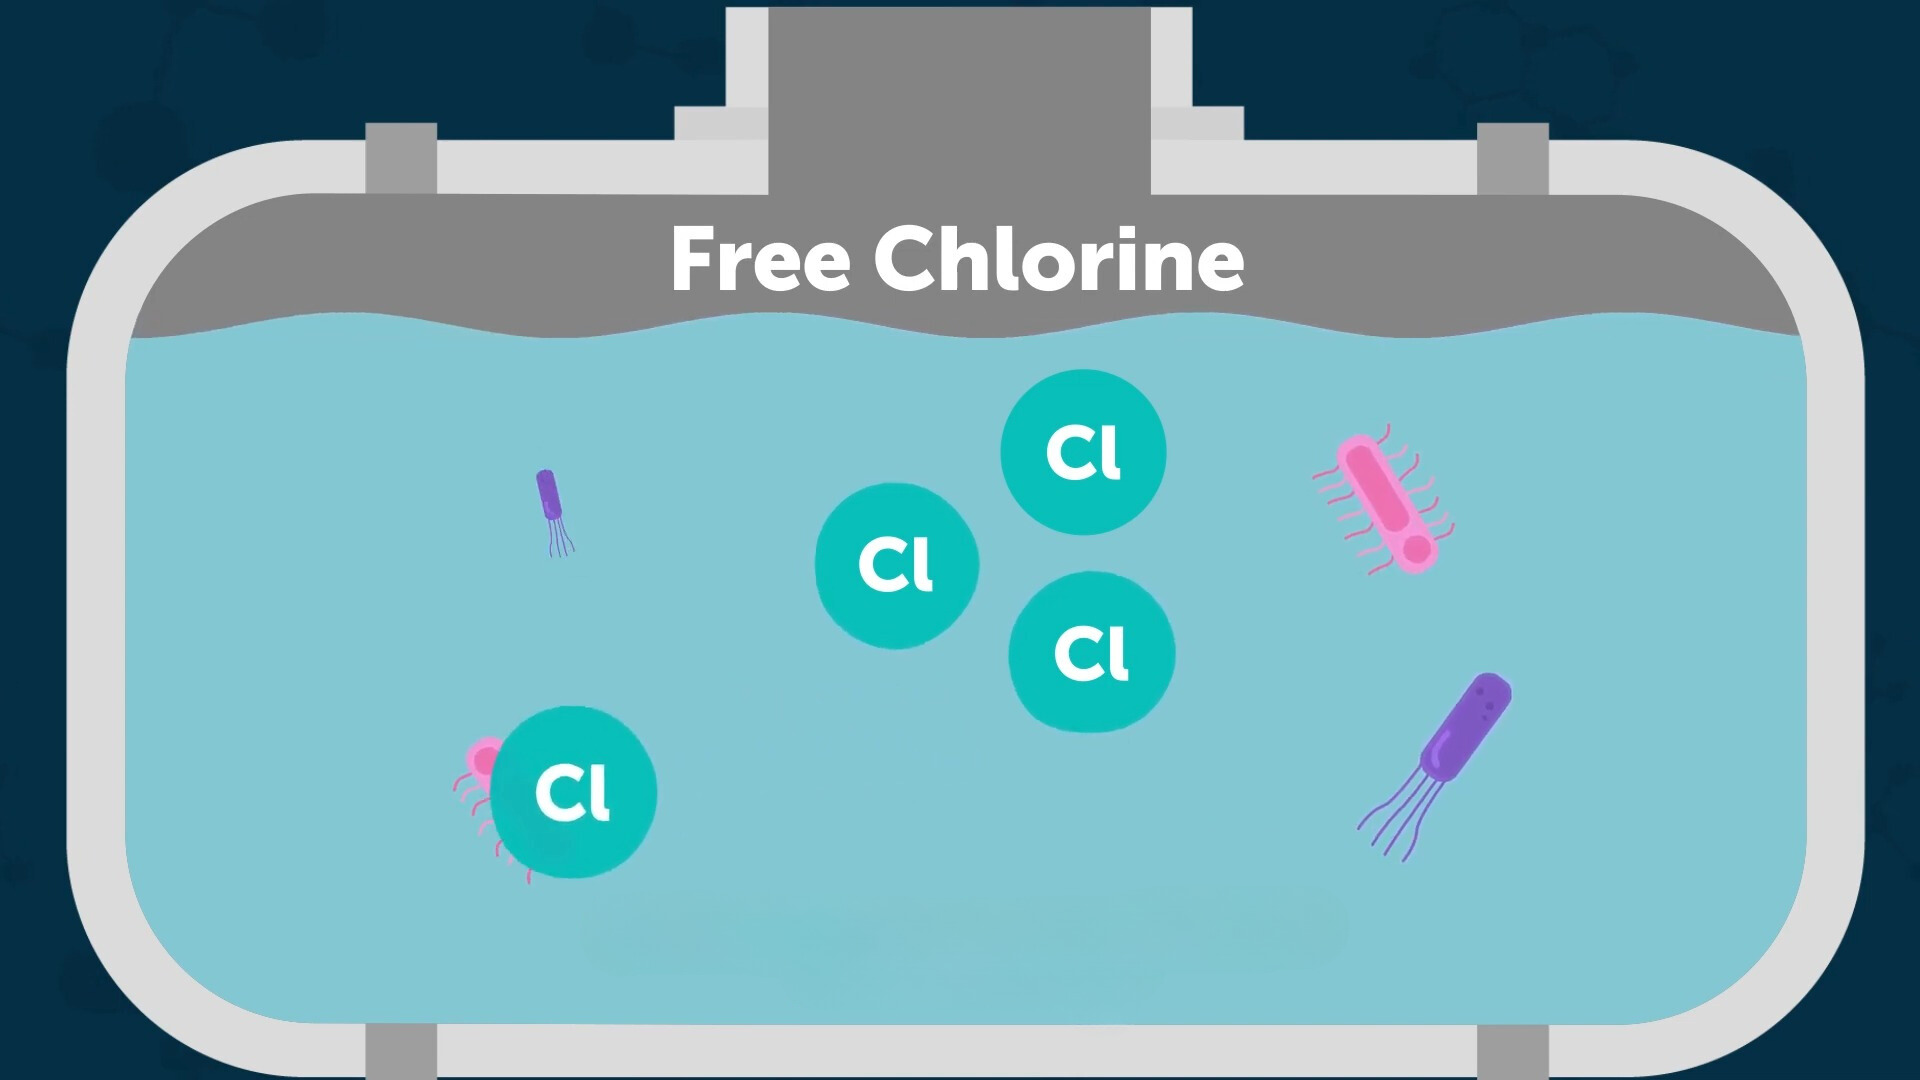 Free Chlorine - Contaminants